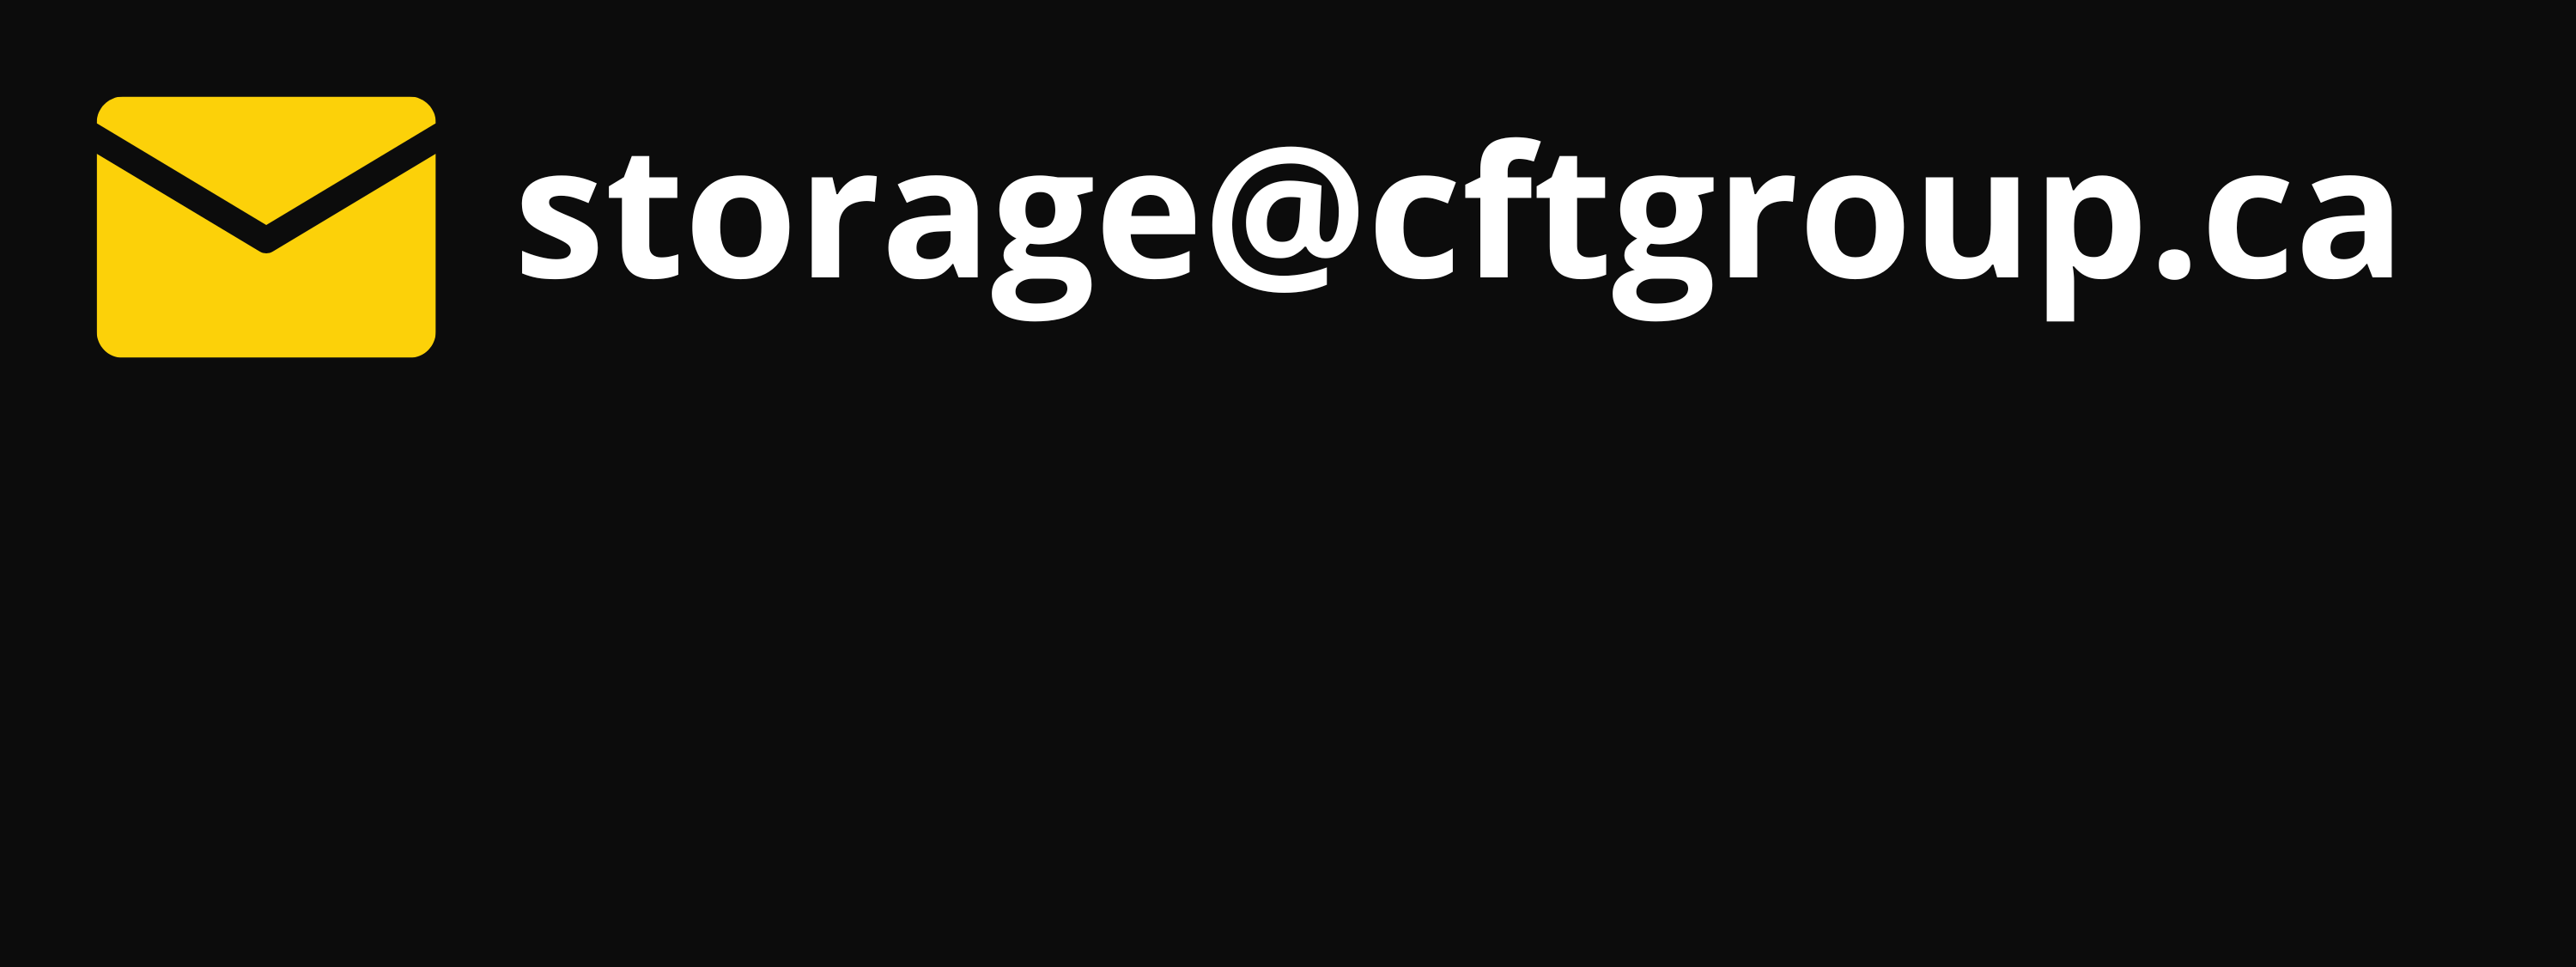 Email: storage@cftgroup.ca